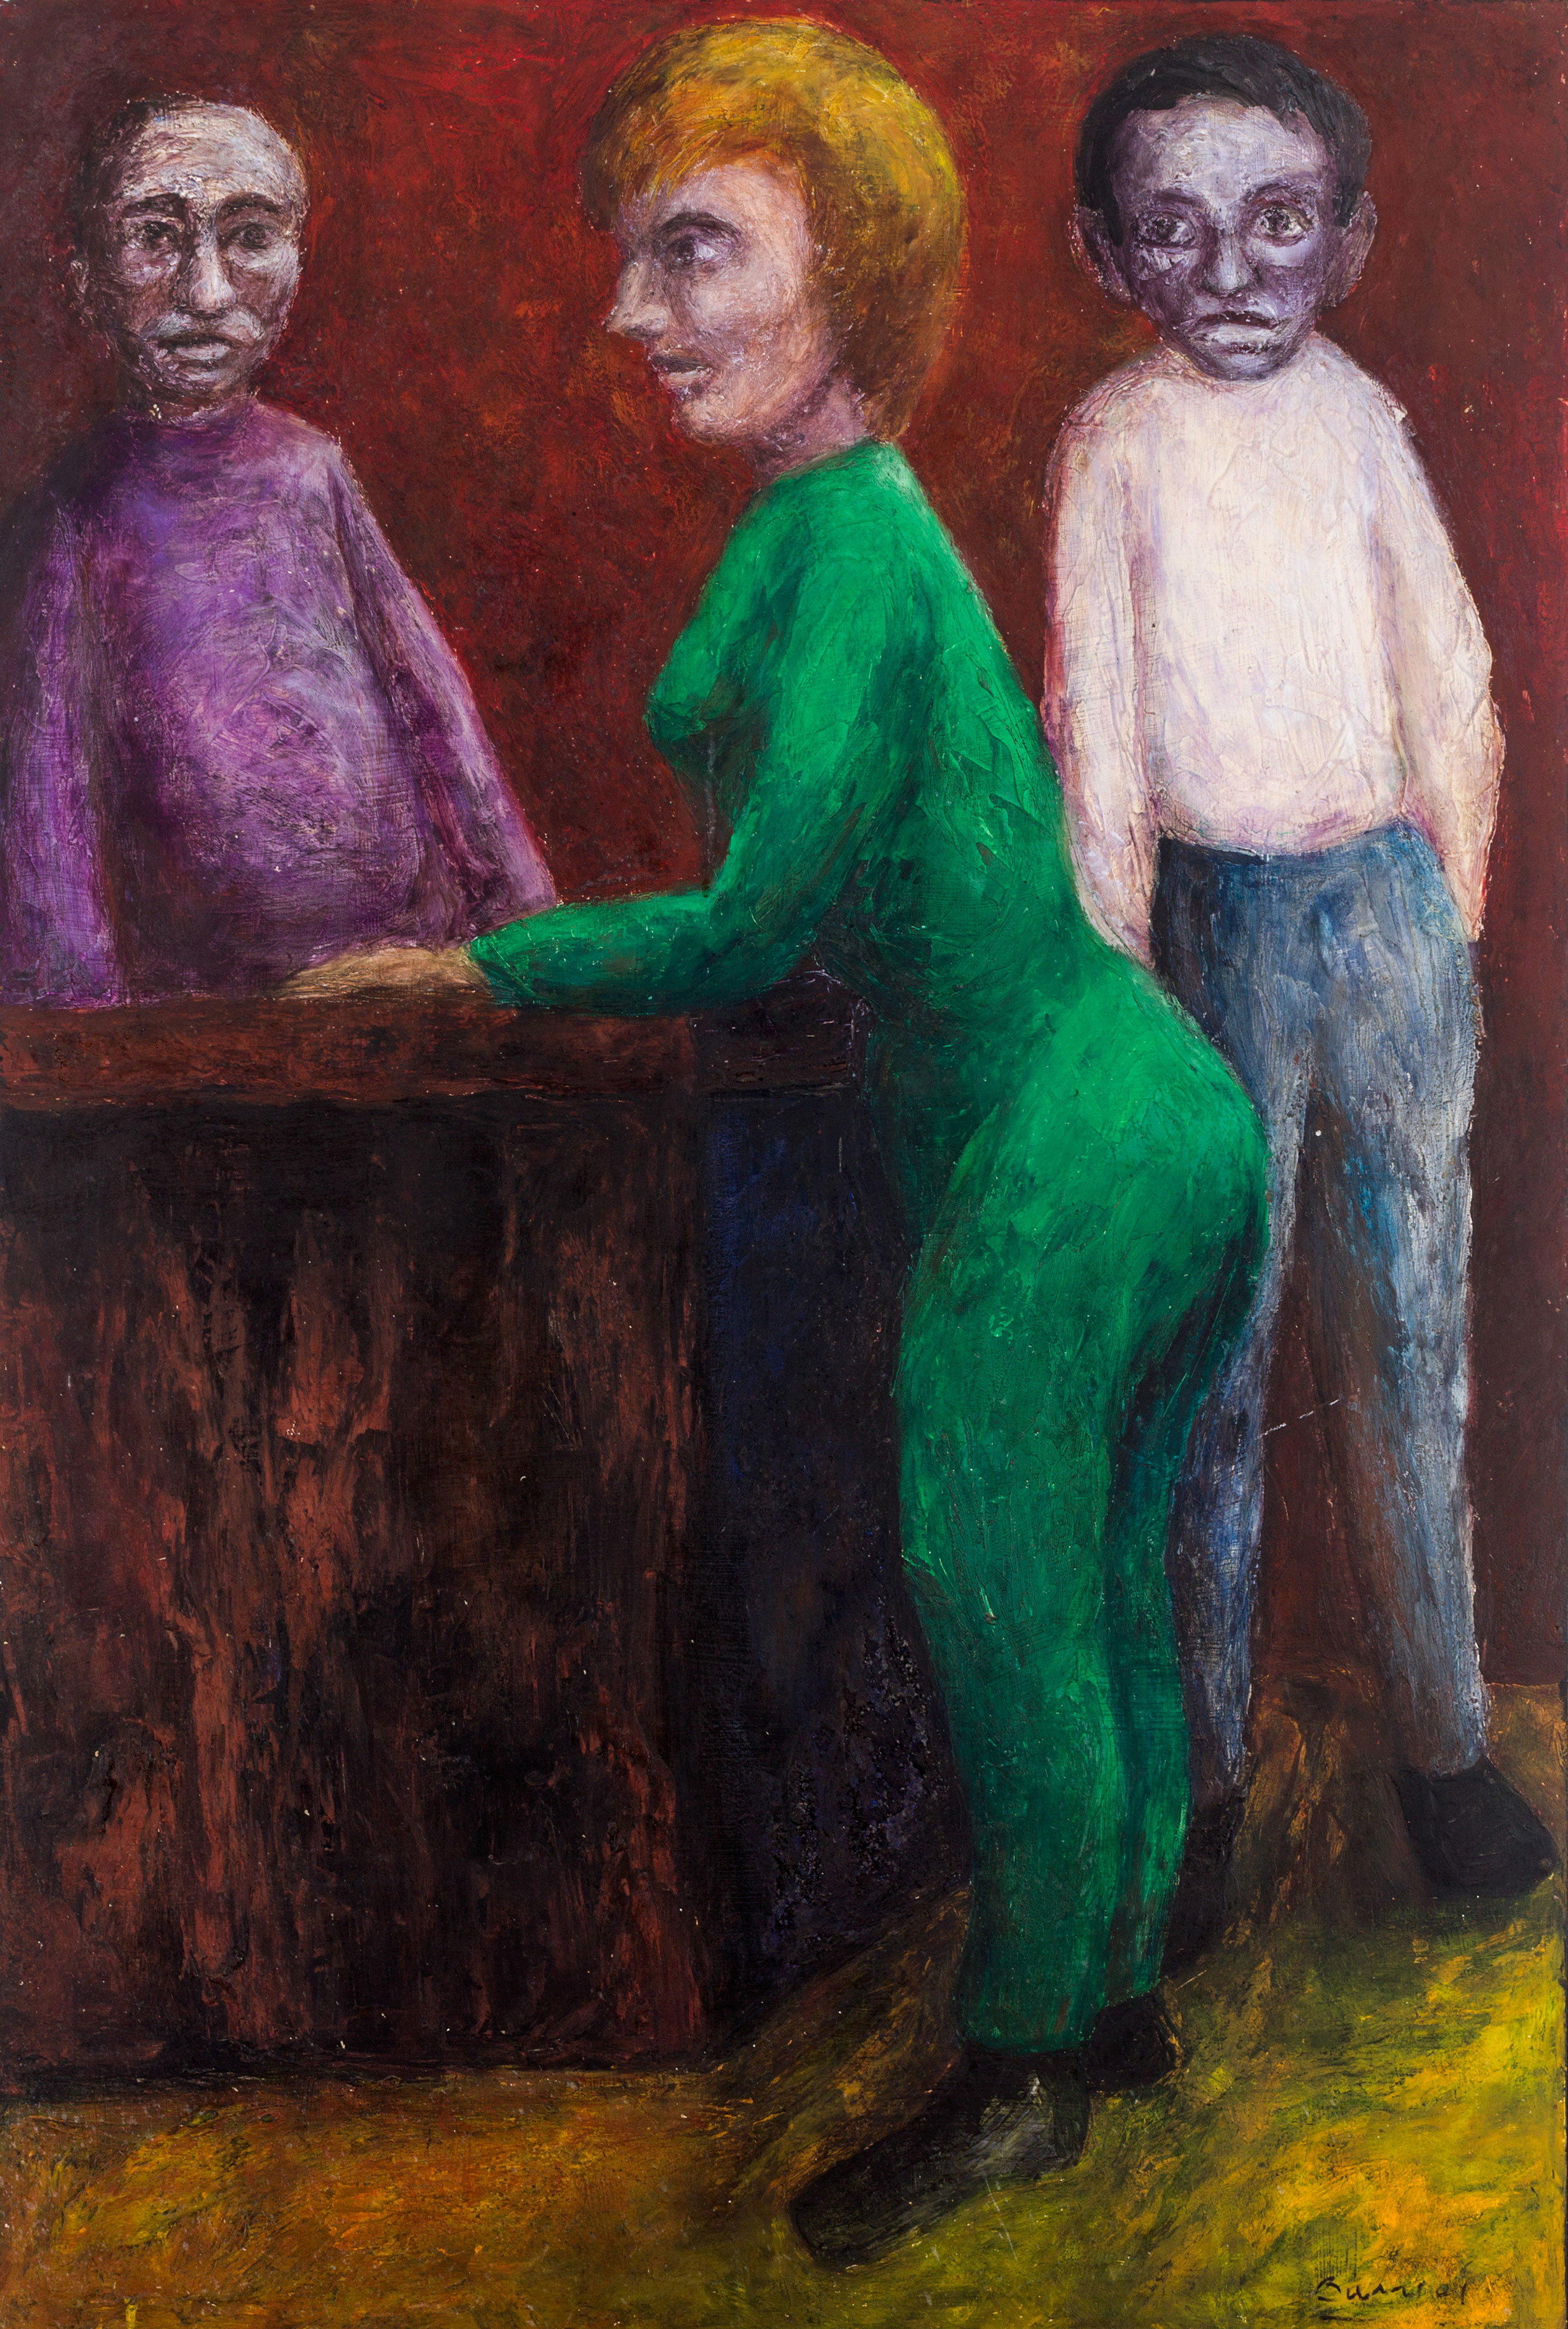 Galerie Barbara Thumm \ Teresa Burga – Untitled (Figurative scene with a woman in green between two men) (TBu-65-005) \ Untitled (Figurative scene with a woman in green between two men) (1965)